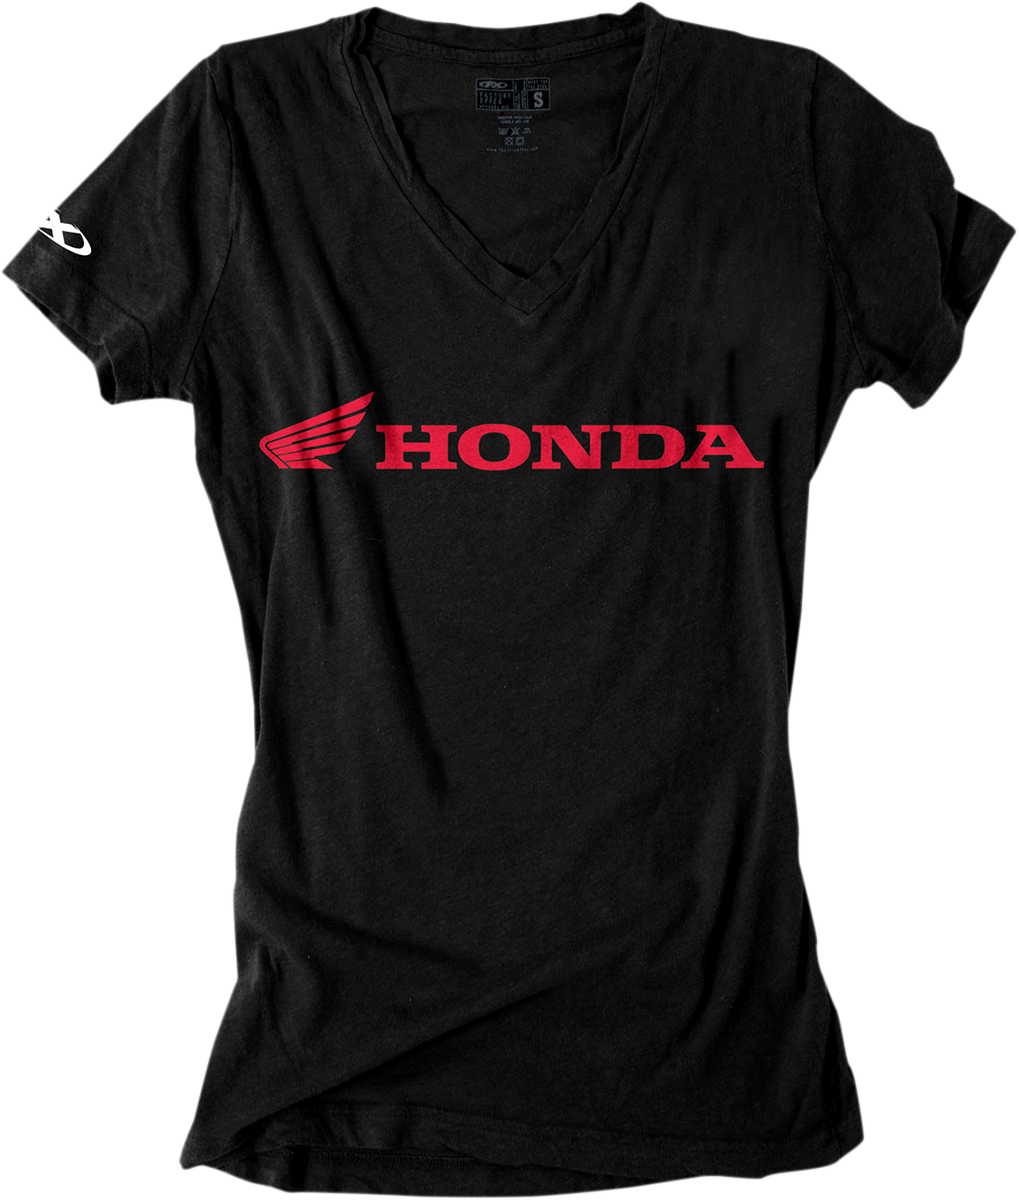 FACTORY EFFEX Women's Honda V-Neck T-Shirt - Black - Medium 16-88342